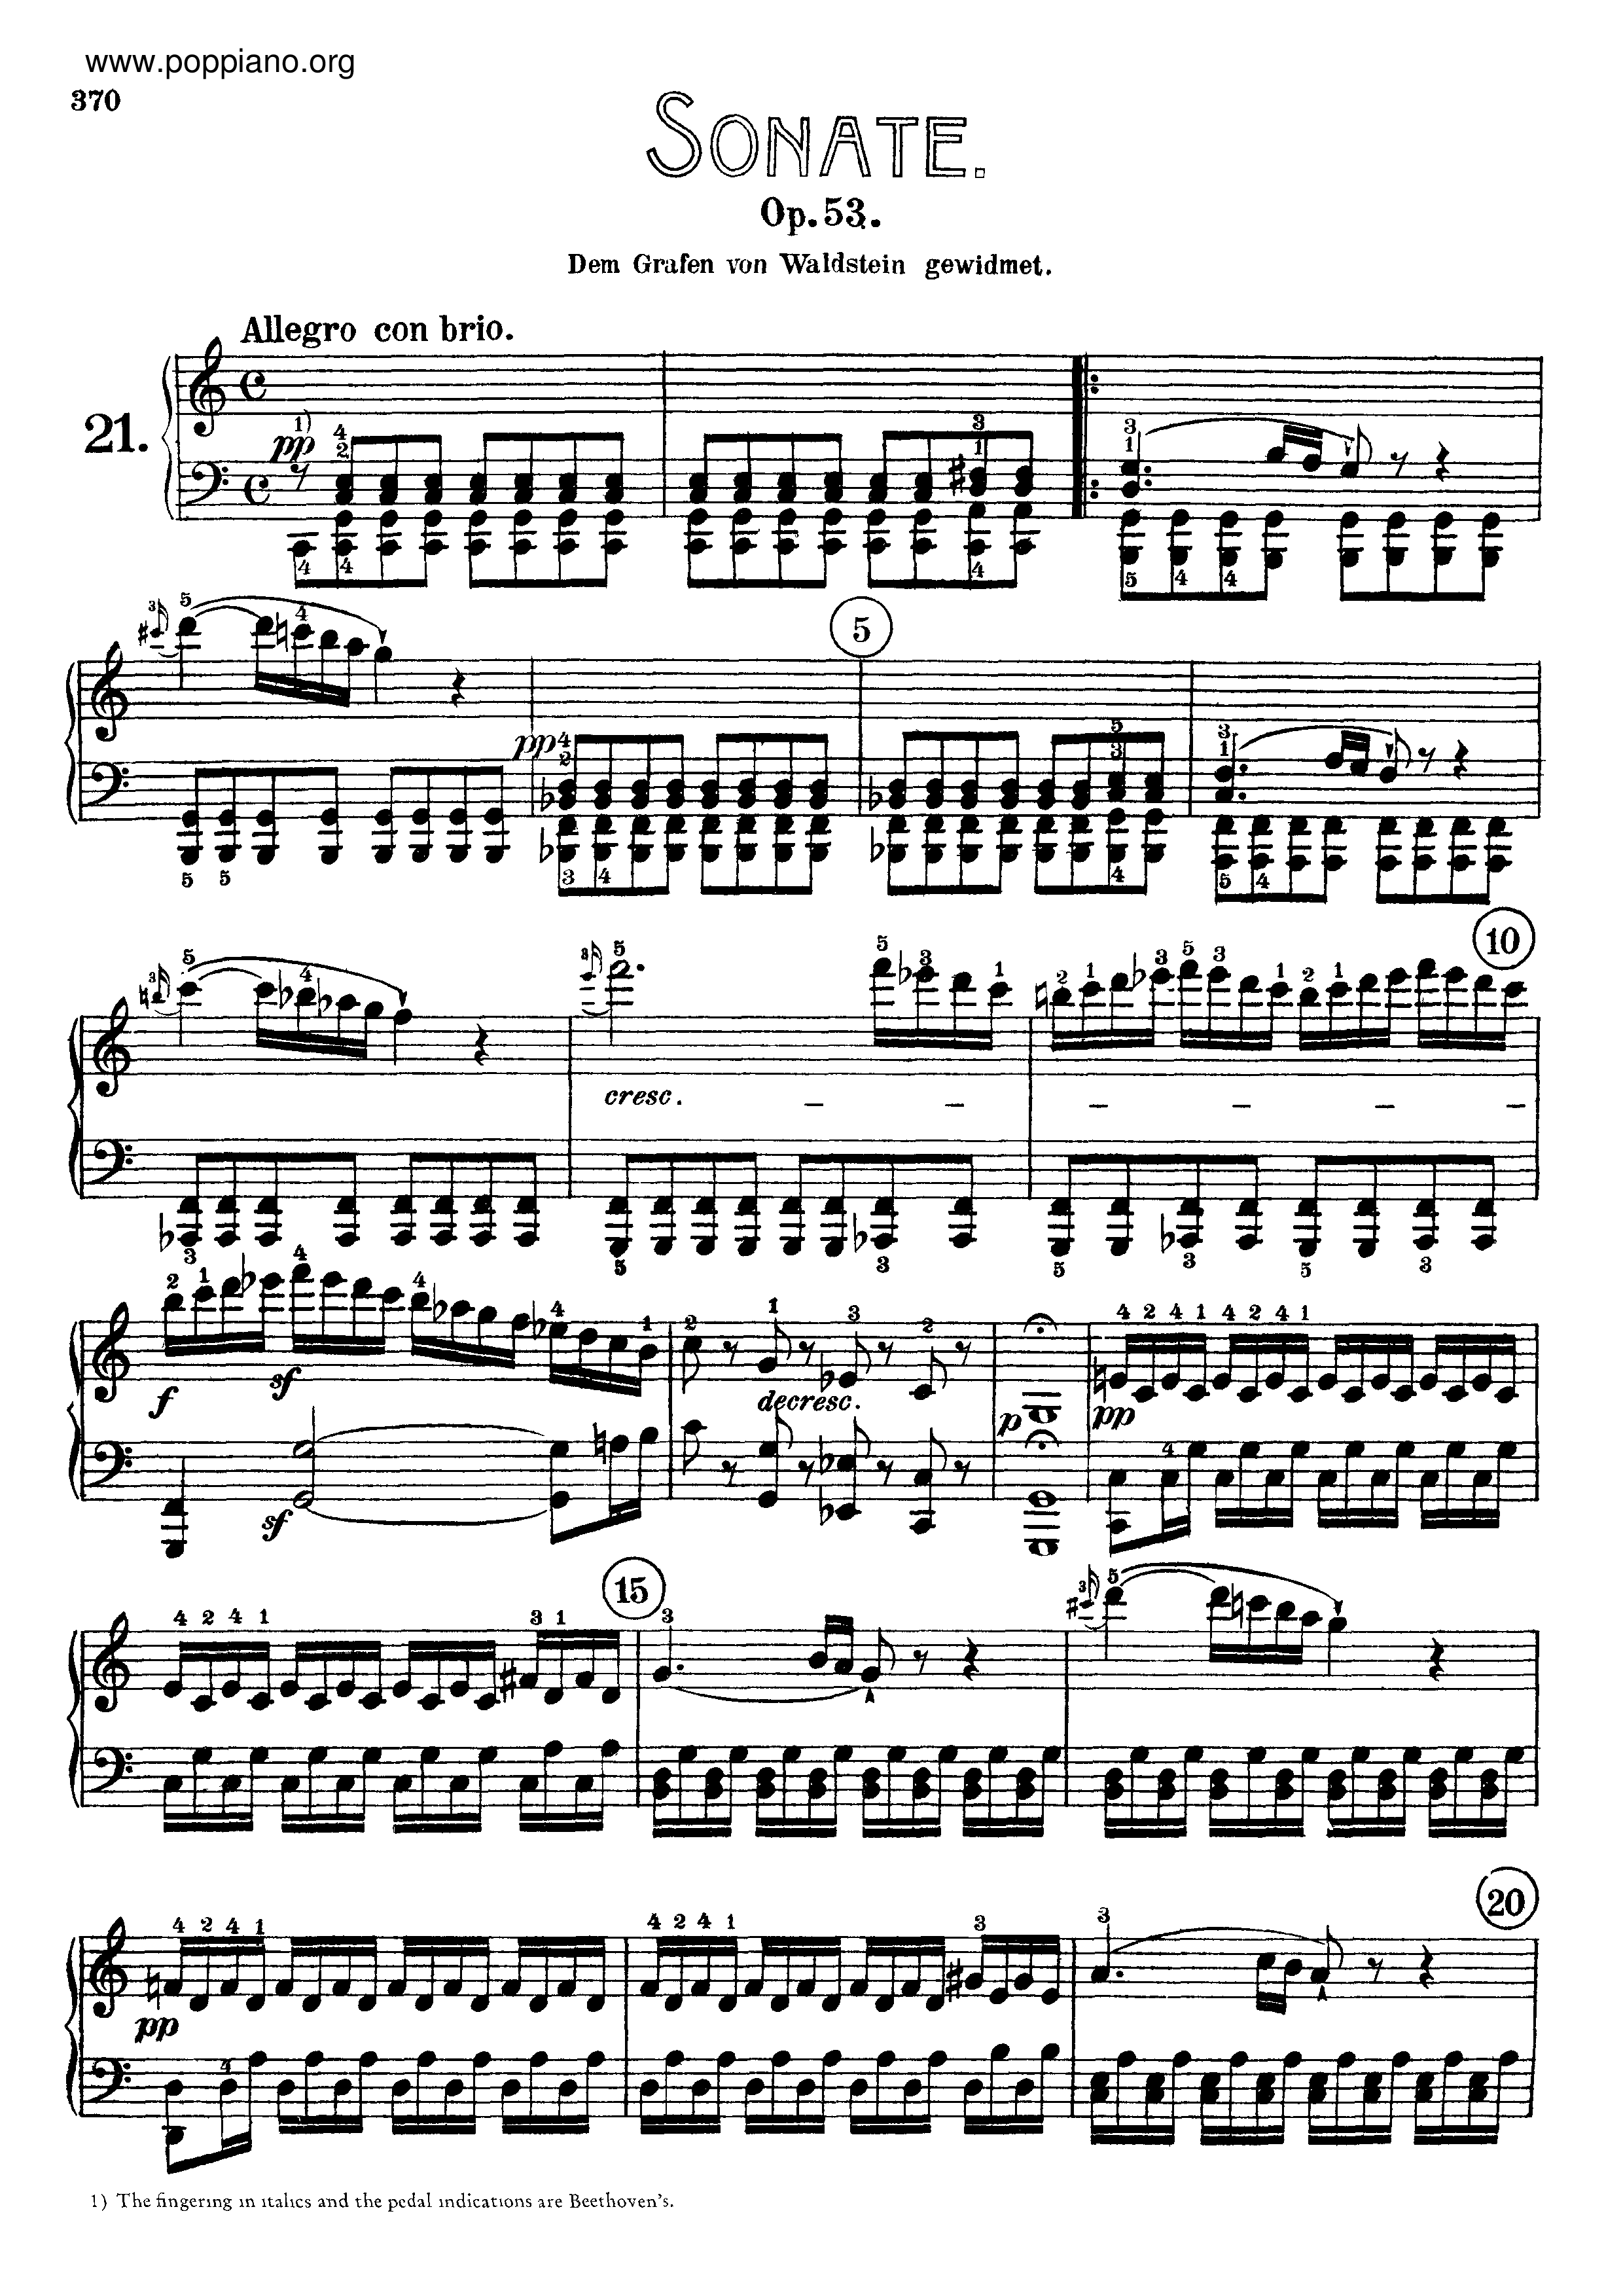 Sonata No. 21 in C major琴谱